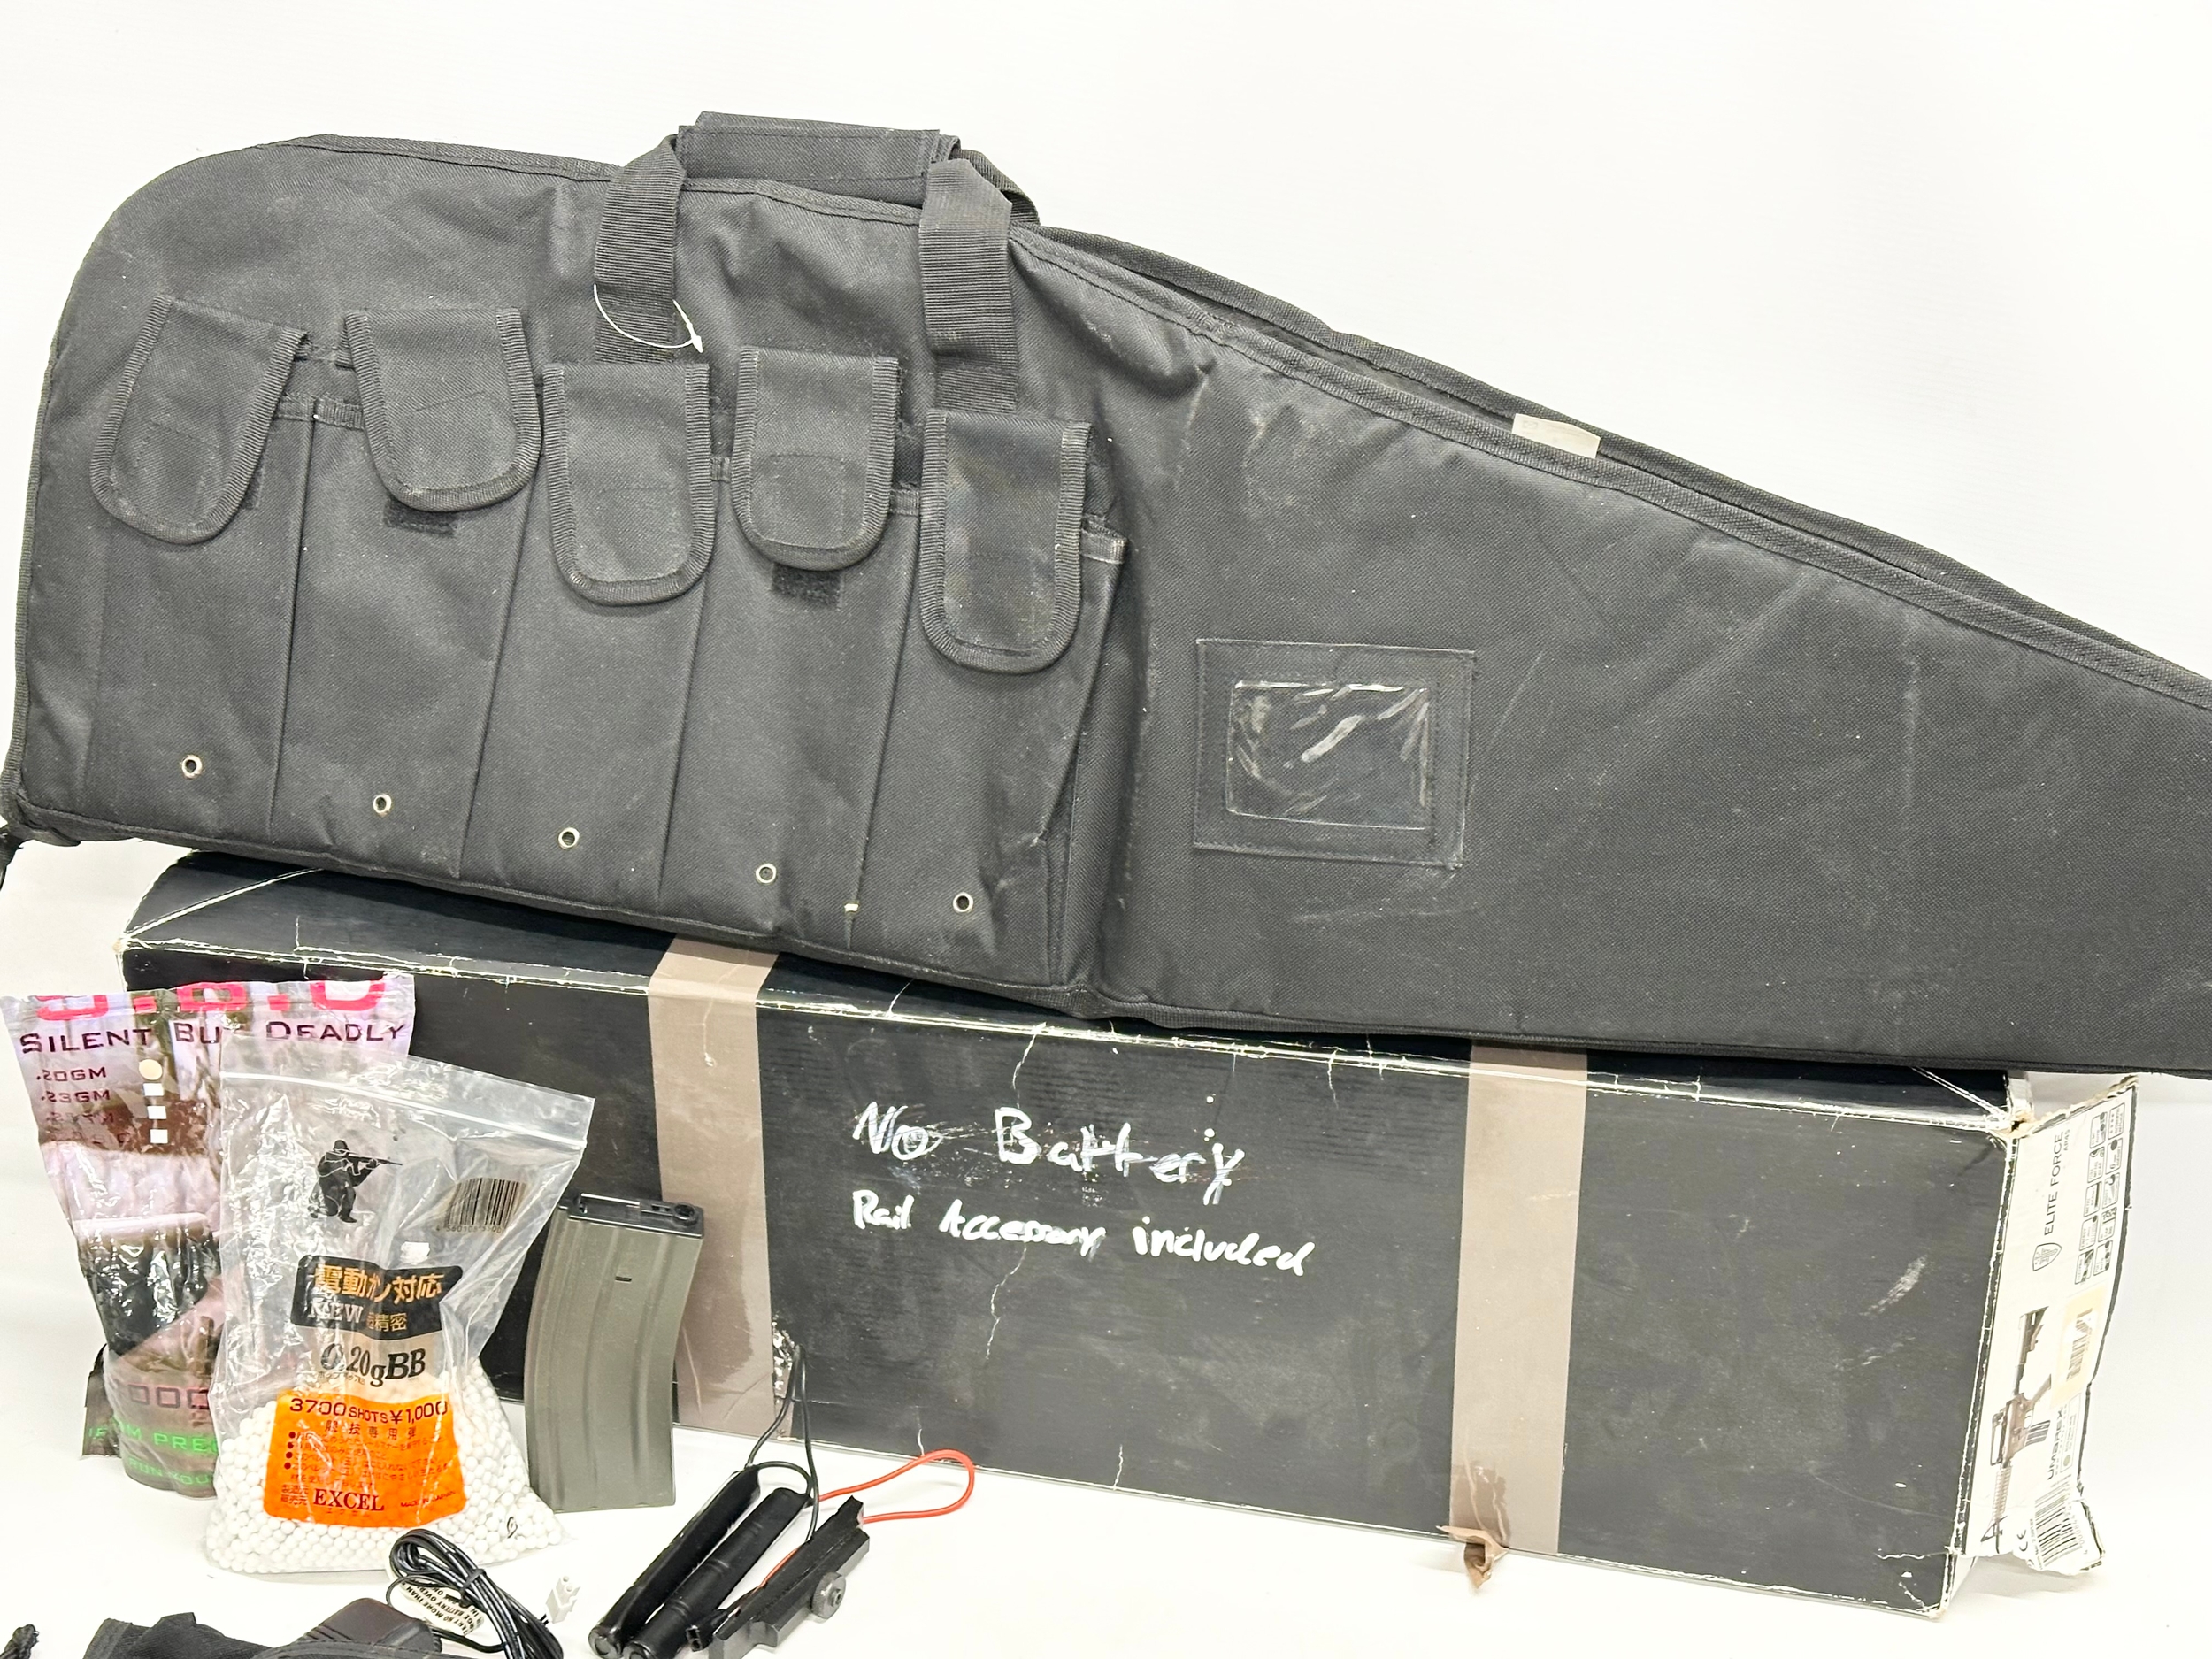 An Umarex Elite Force electric assault rifle with box, pellets, tactical vest, carting case etc. - Image 6 of 7